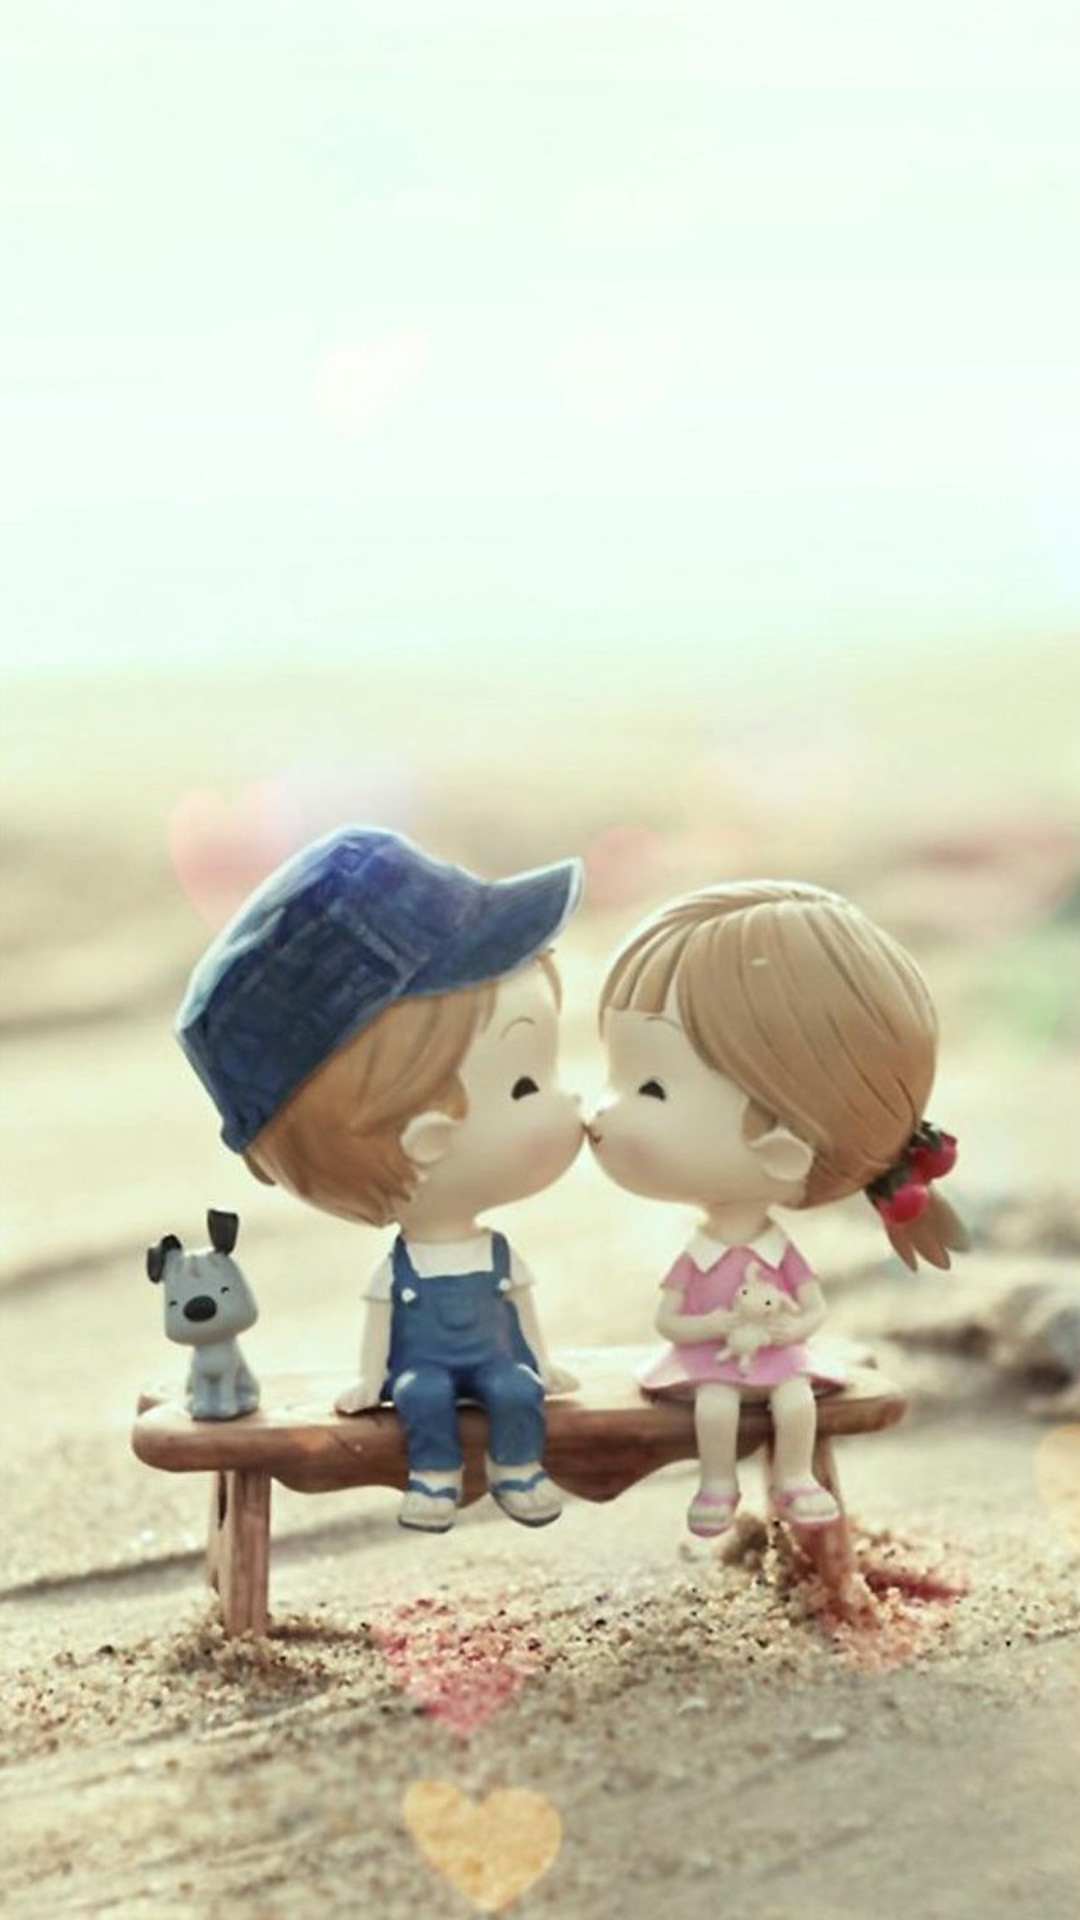 1080x1920 Cute Cartoon Kissing Couple iPhone 6 Wallpaper Download | iPhone